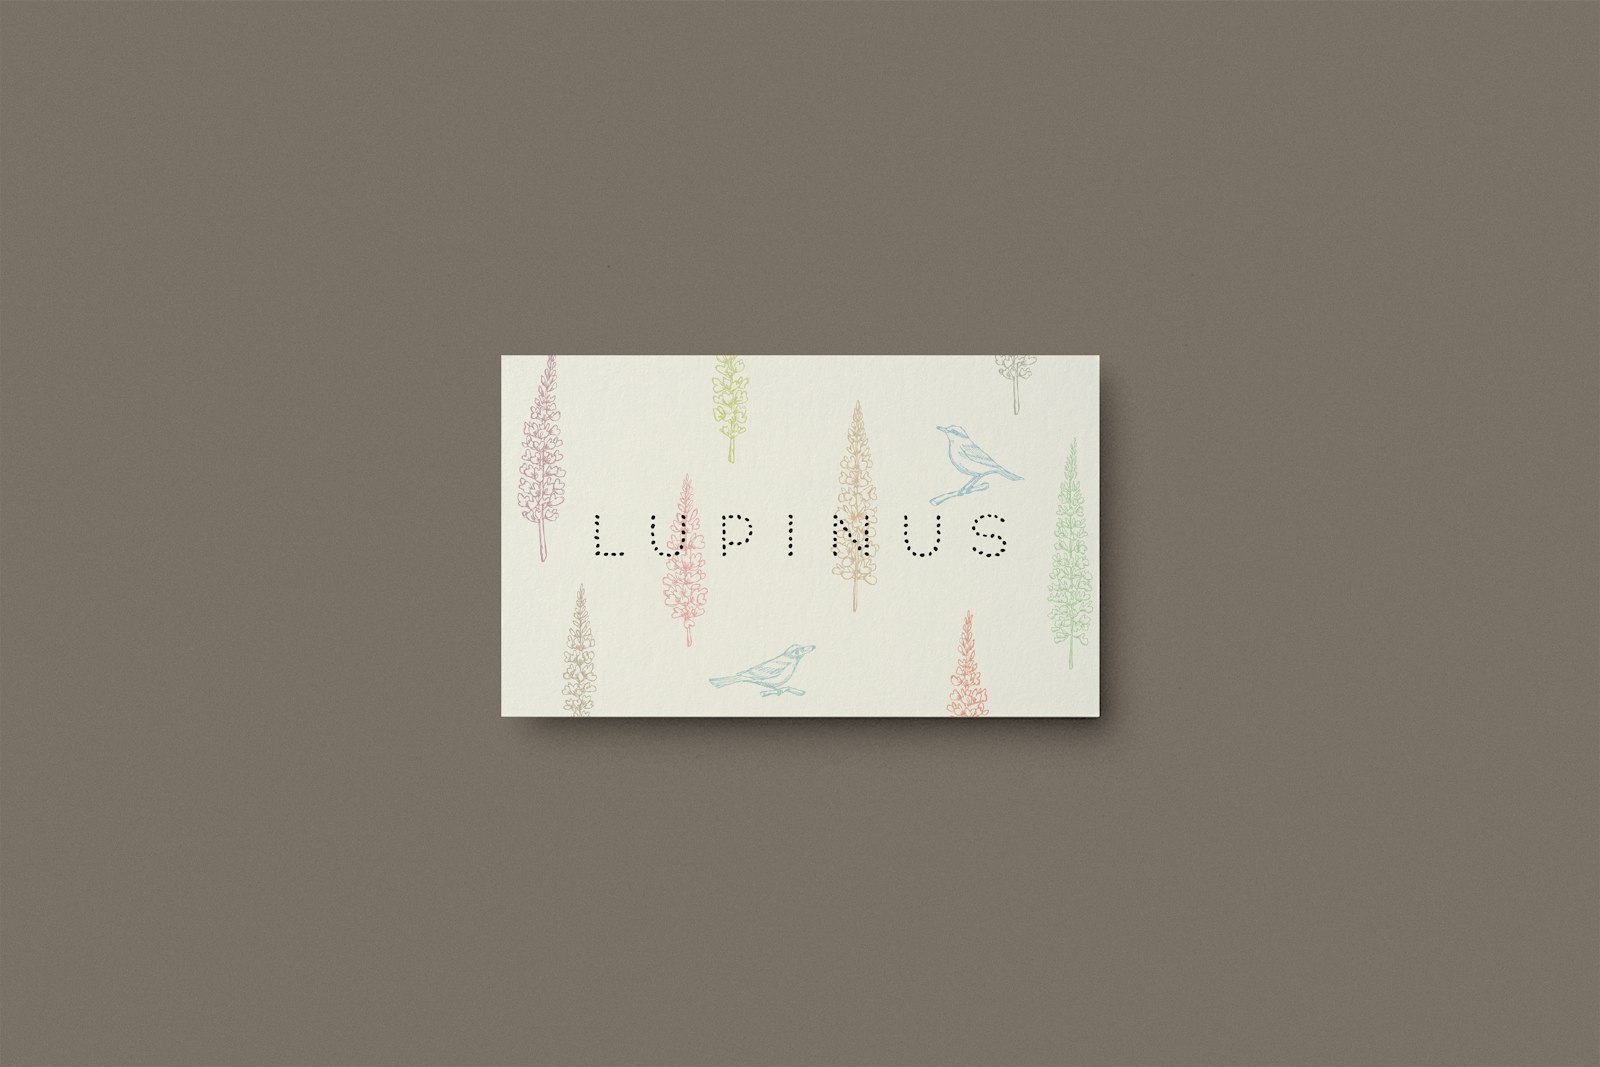 Lupinus